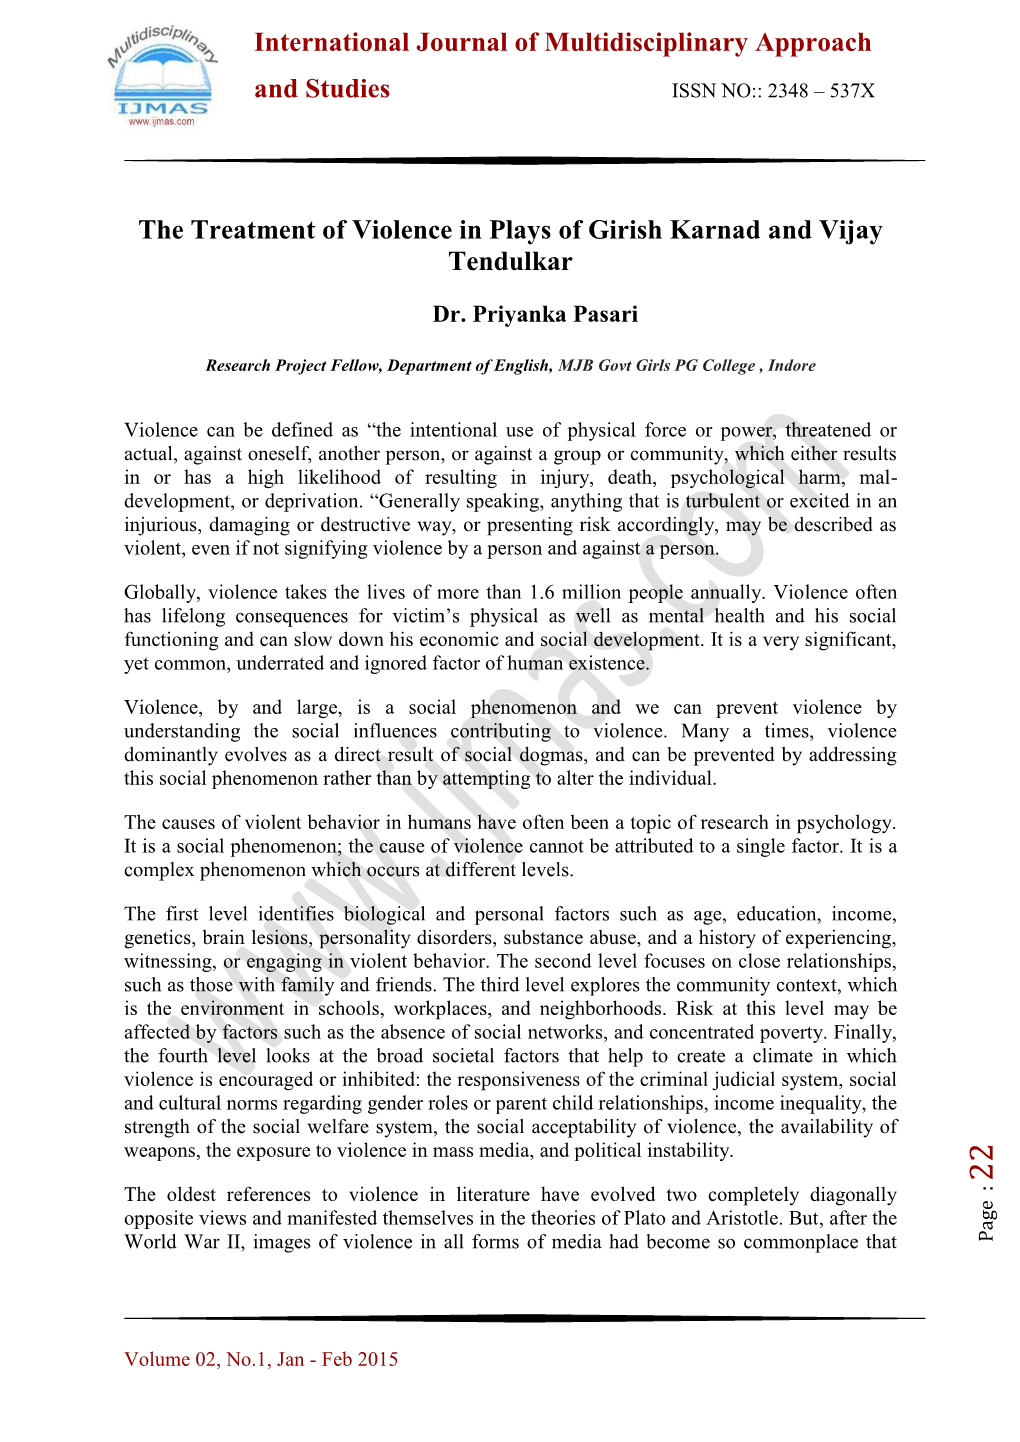 The Treatment of Violence in Plays of Girish Karnad and Vijay Tendulkar